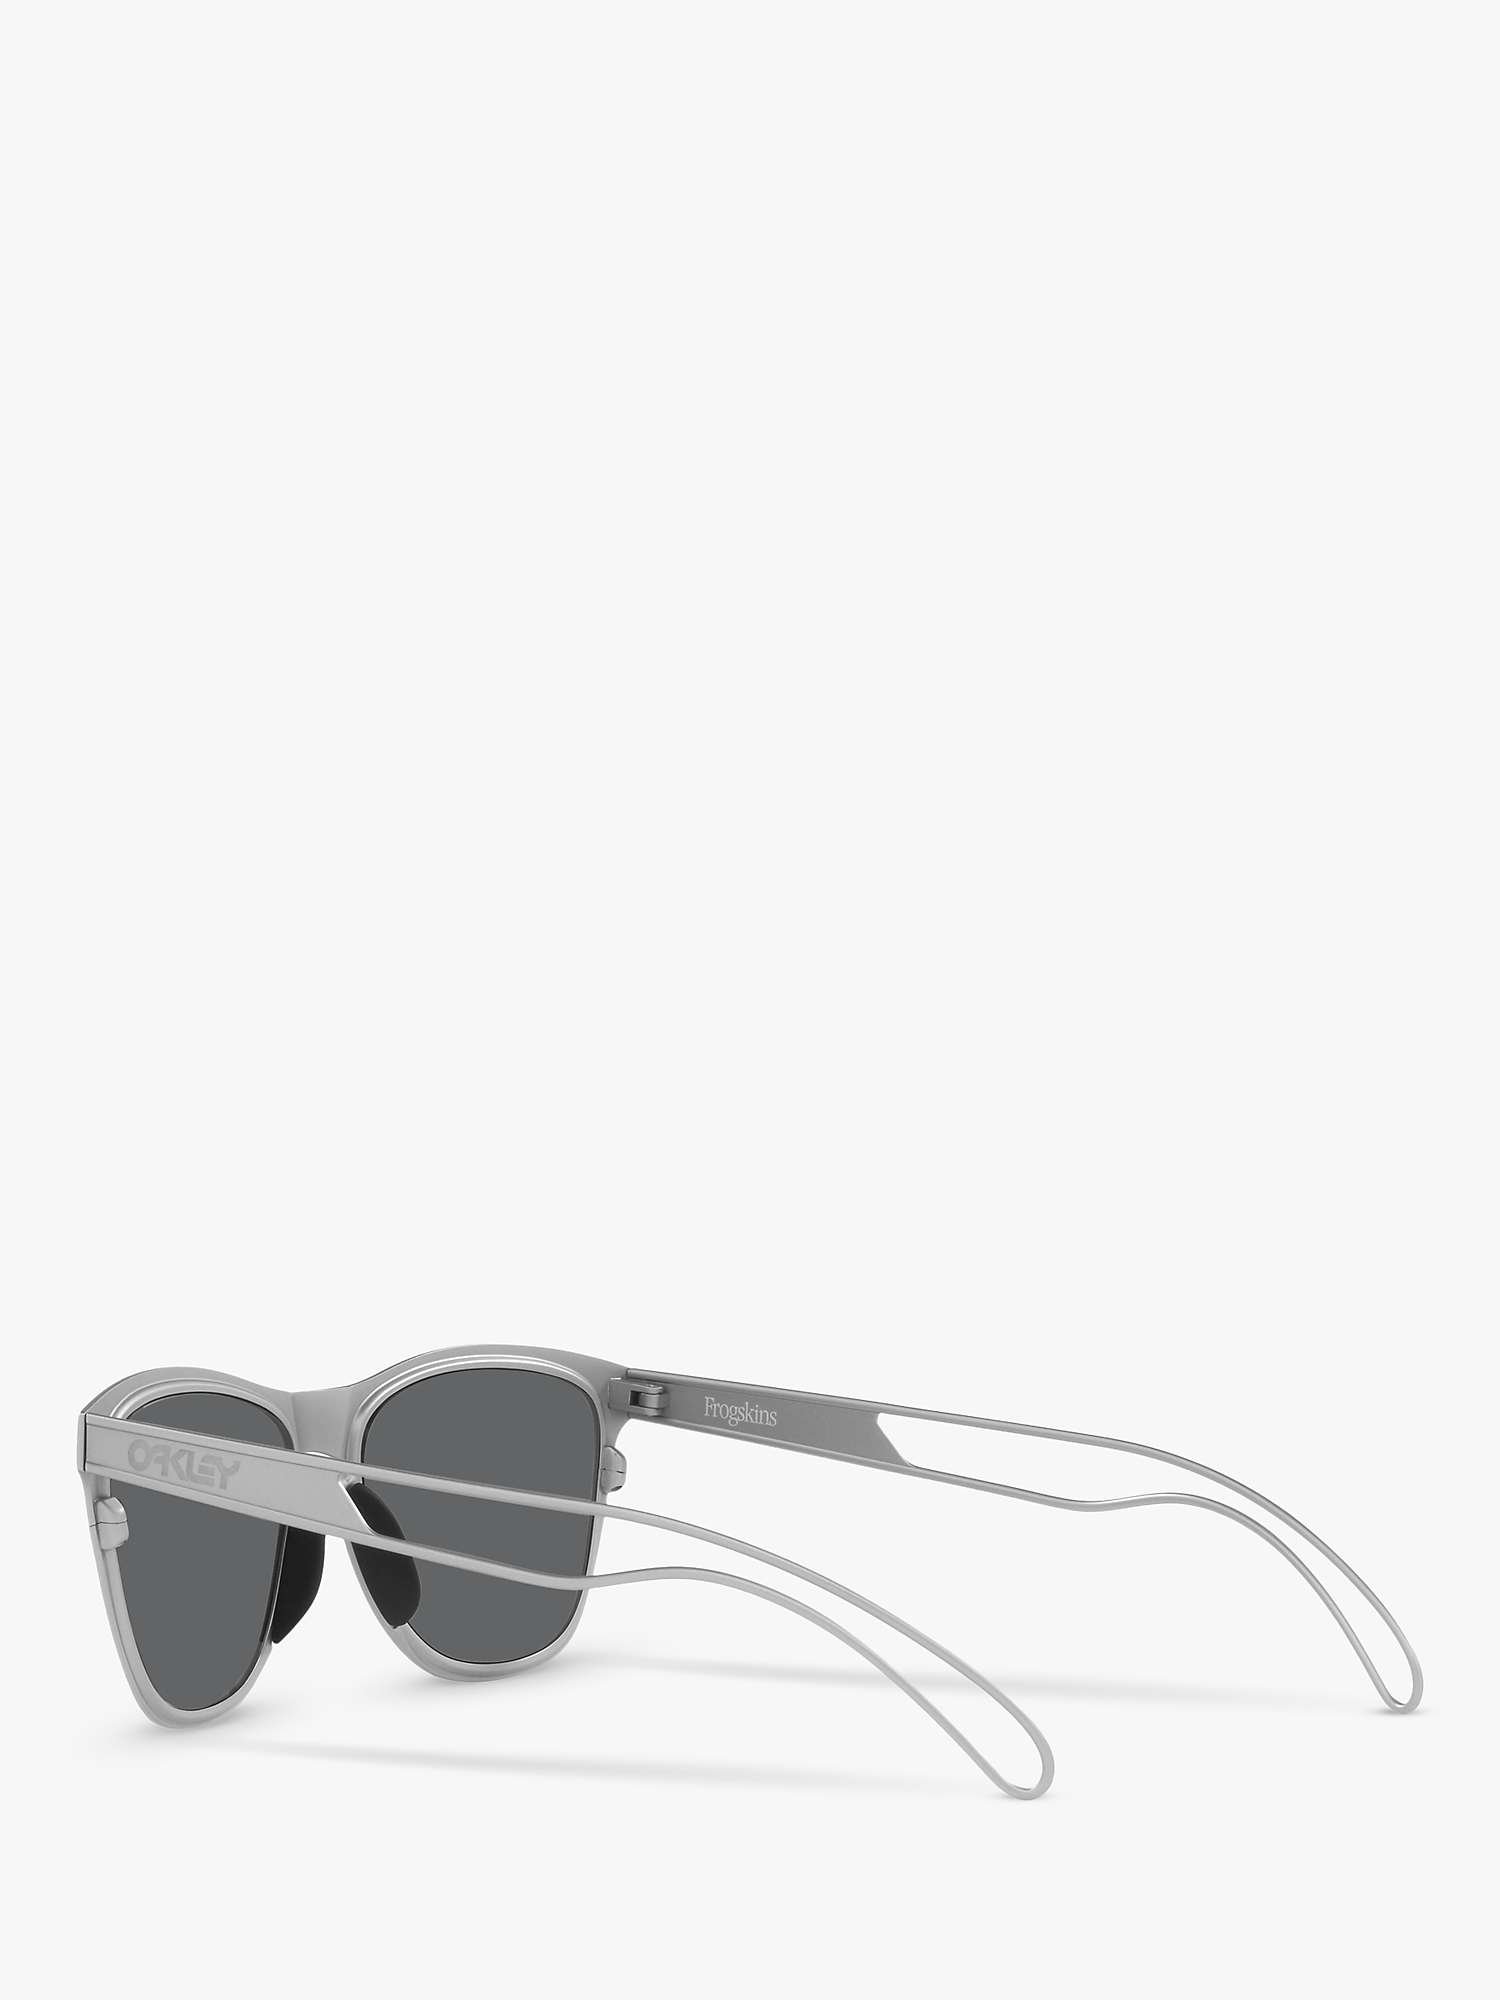 Buy Oakley OO60446 Men's Frogskins Sunglasses, Raw Titanium Online at johnlewis.com